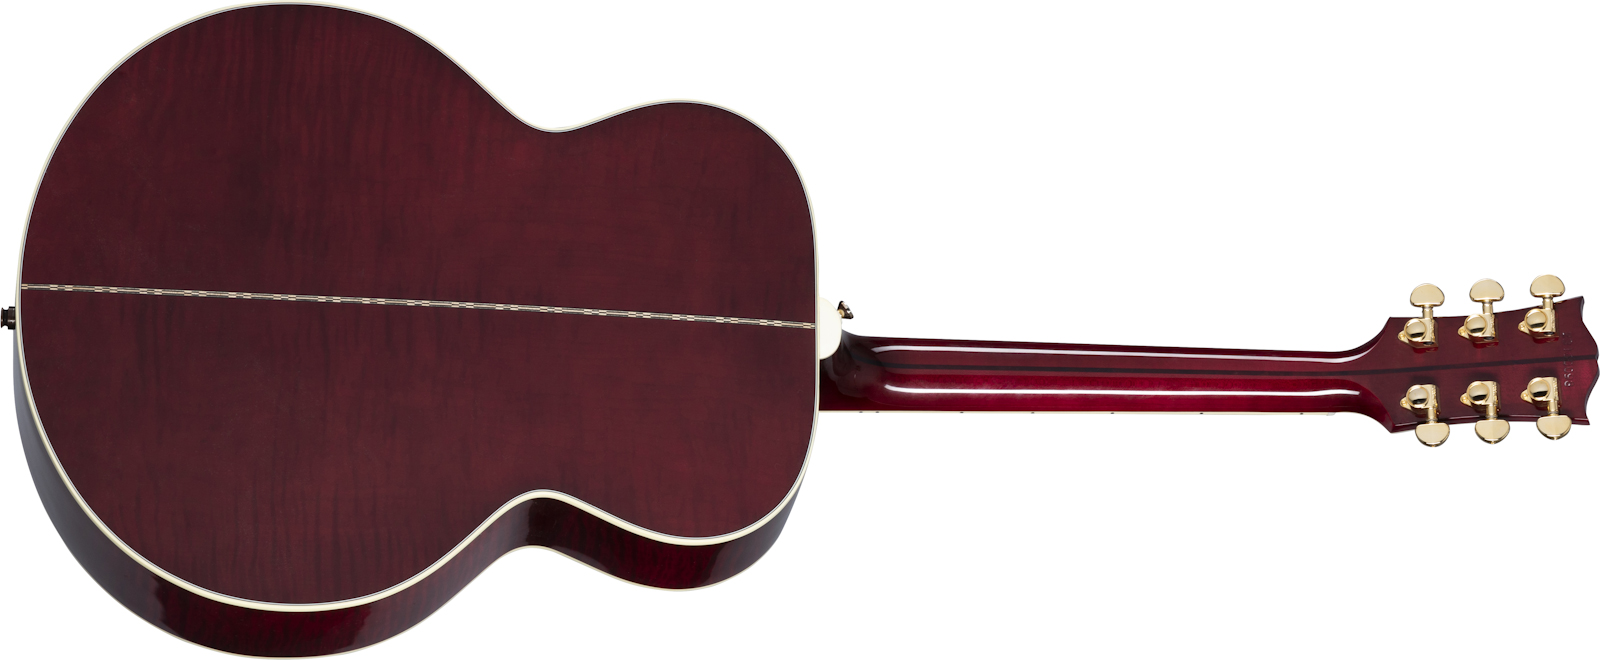 Gibson Sj-200 Standard Modern 2021 Super Jumbo Epicea Erable Rw - Wine Red - Electro acoustic guitar - Variation 1